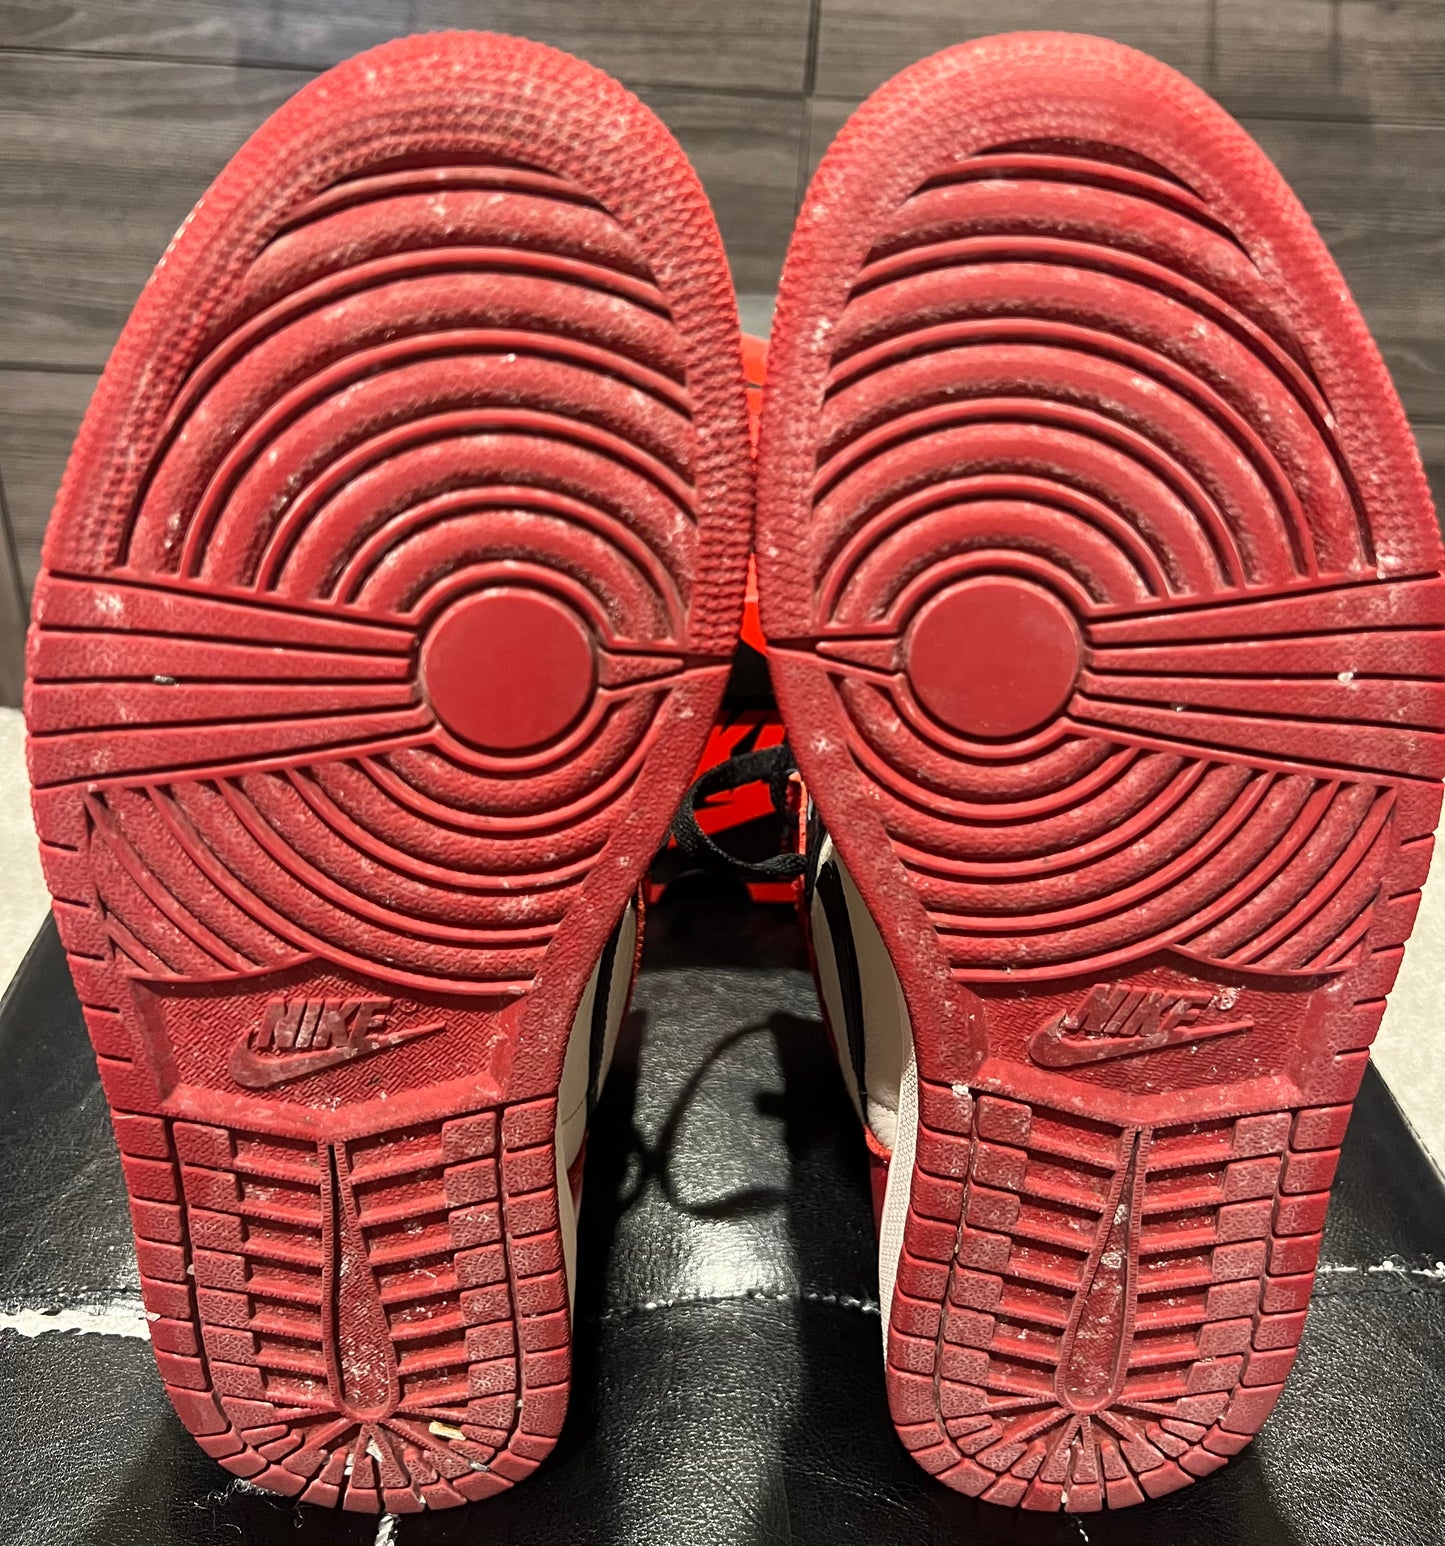 Jordan 1 Retro High Bred Toe Sneaker Size 9.5 (2022, 555088-610) (Used, Pre-Worn)